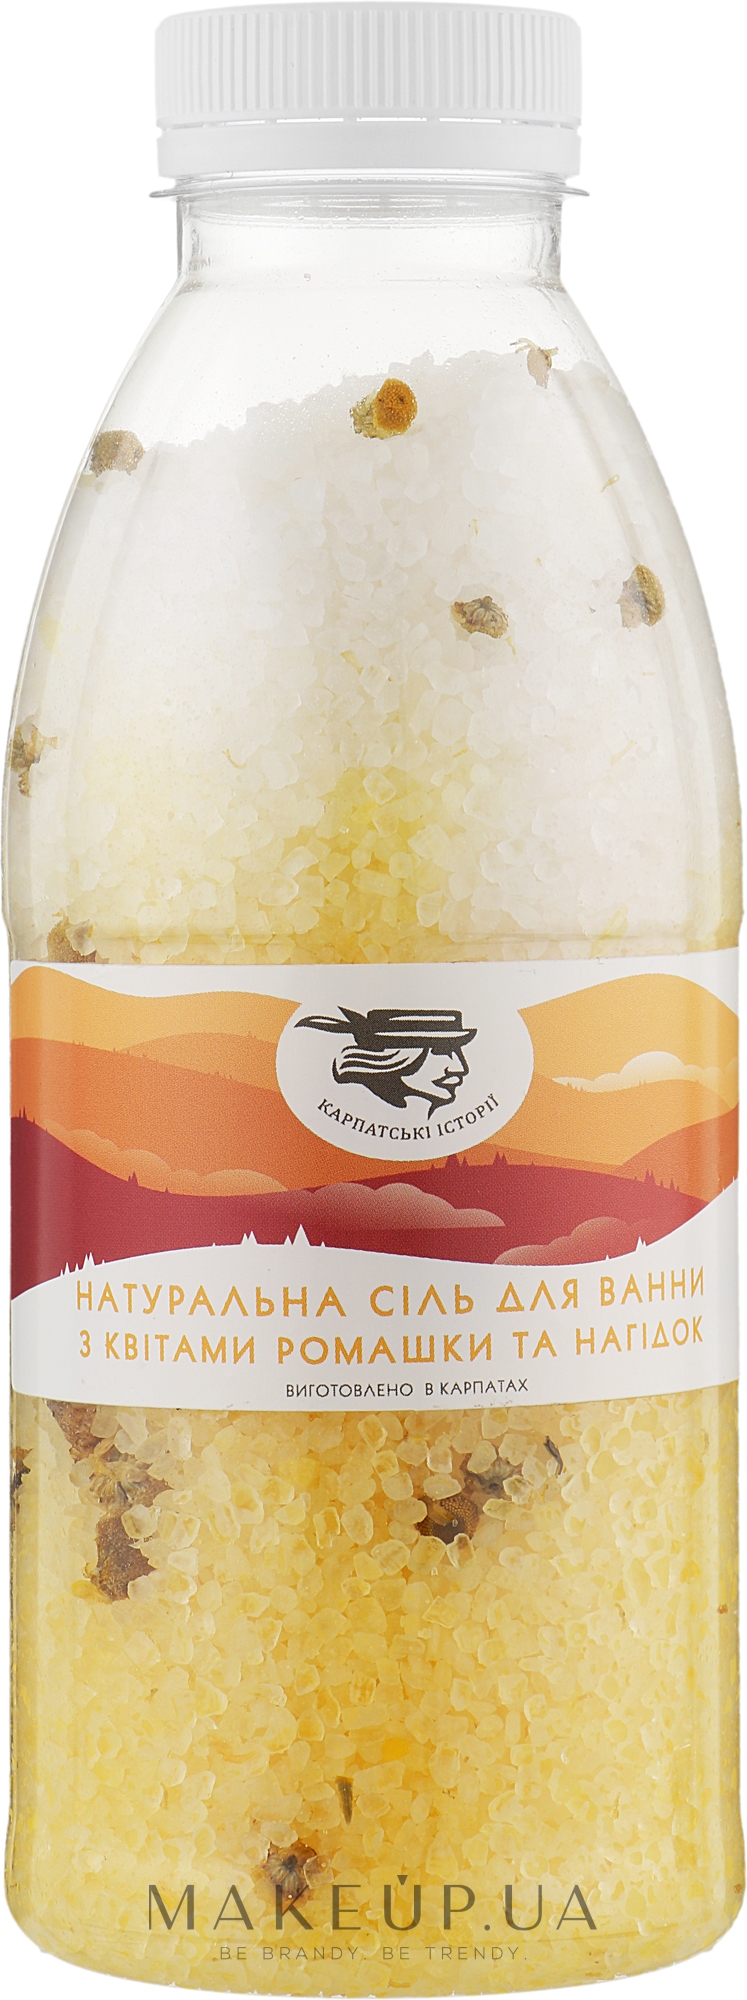 Натуральная соль для ванны с цветами ромашки и календулы - Карпатські Історії — фото 600g